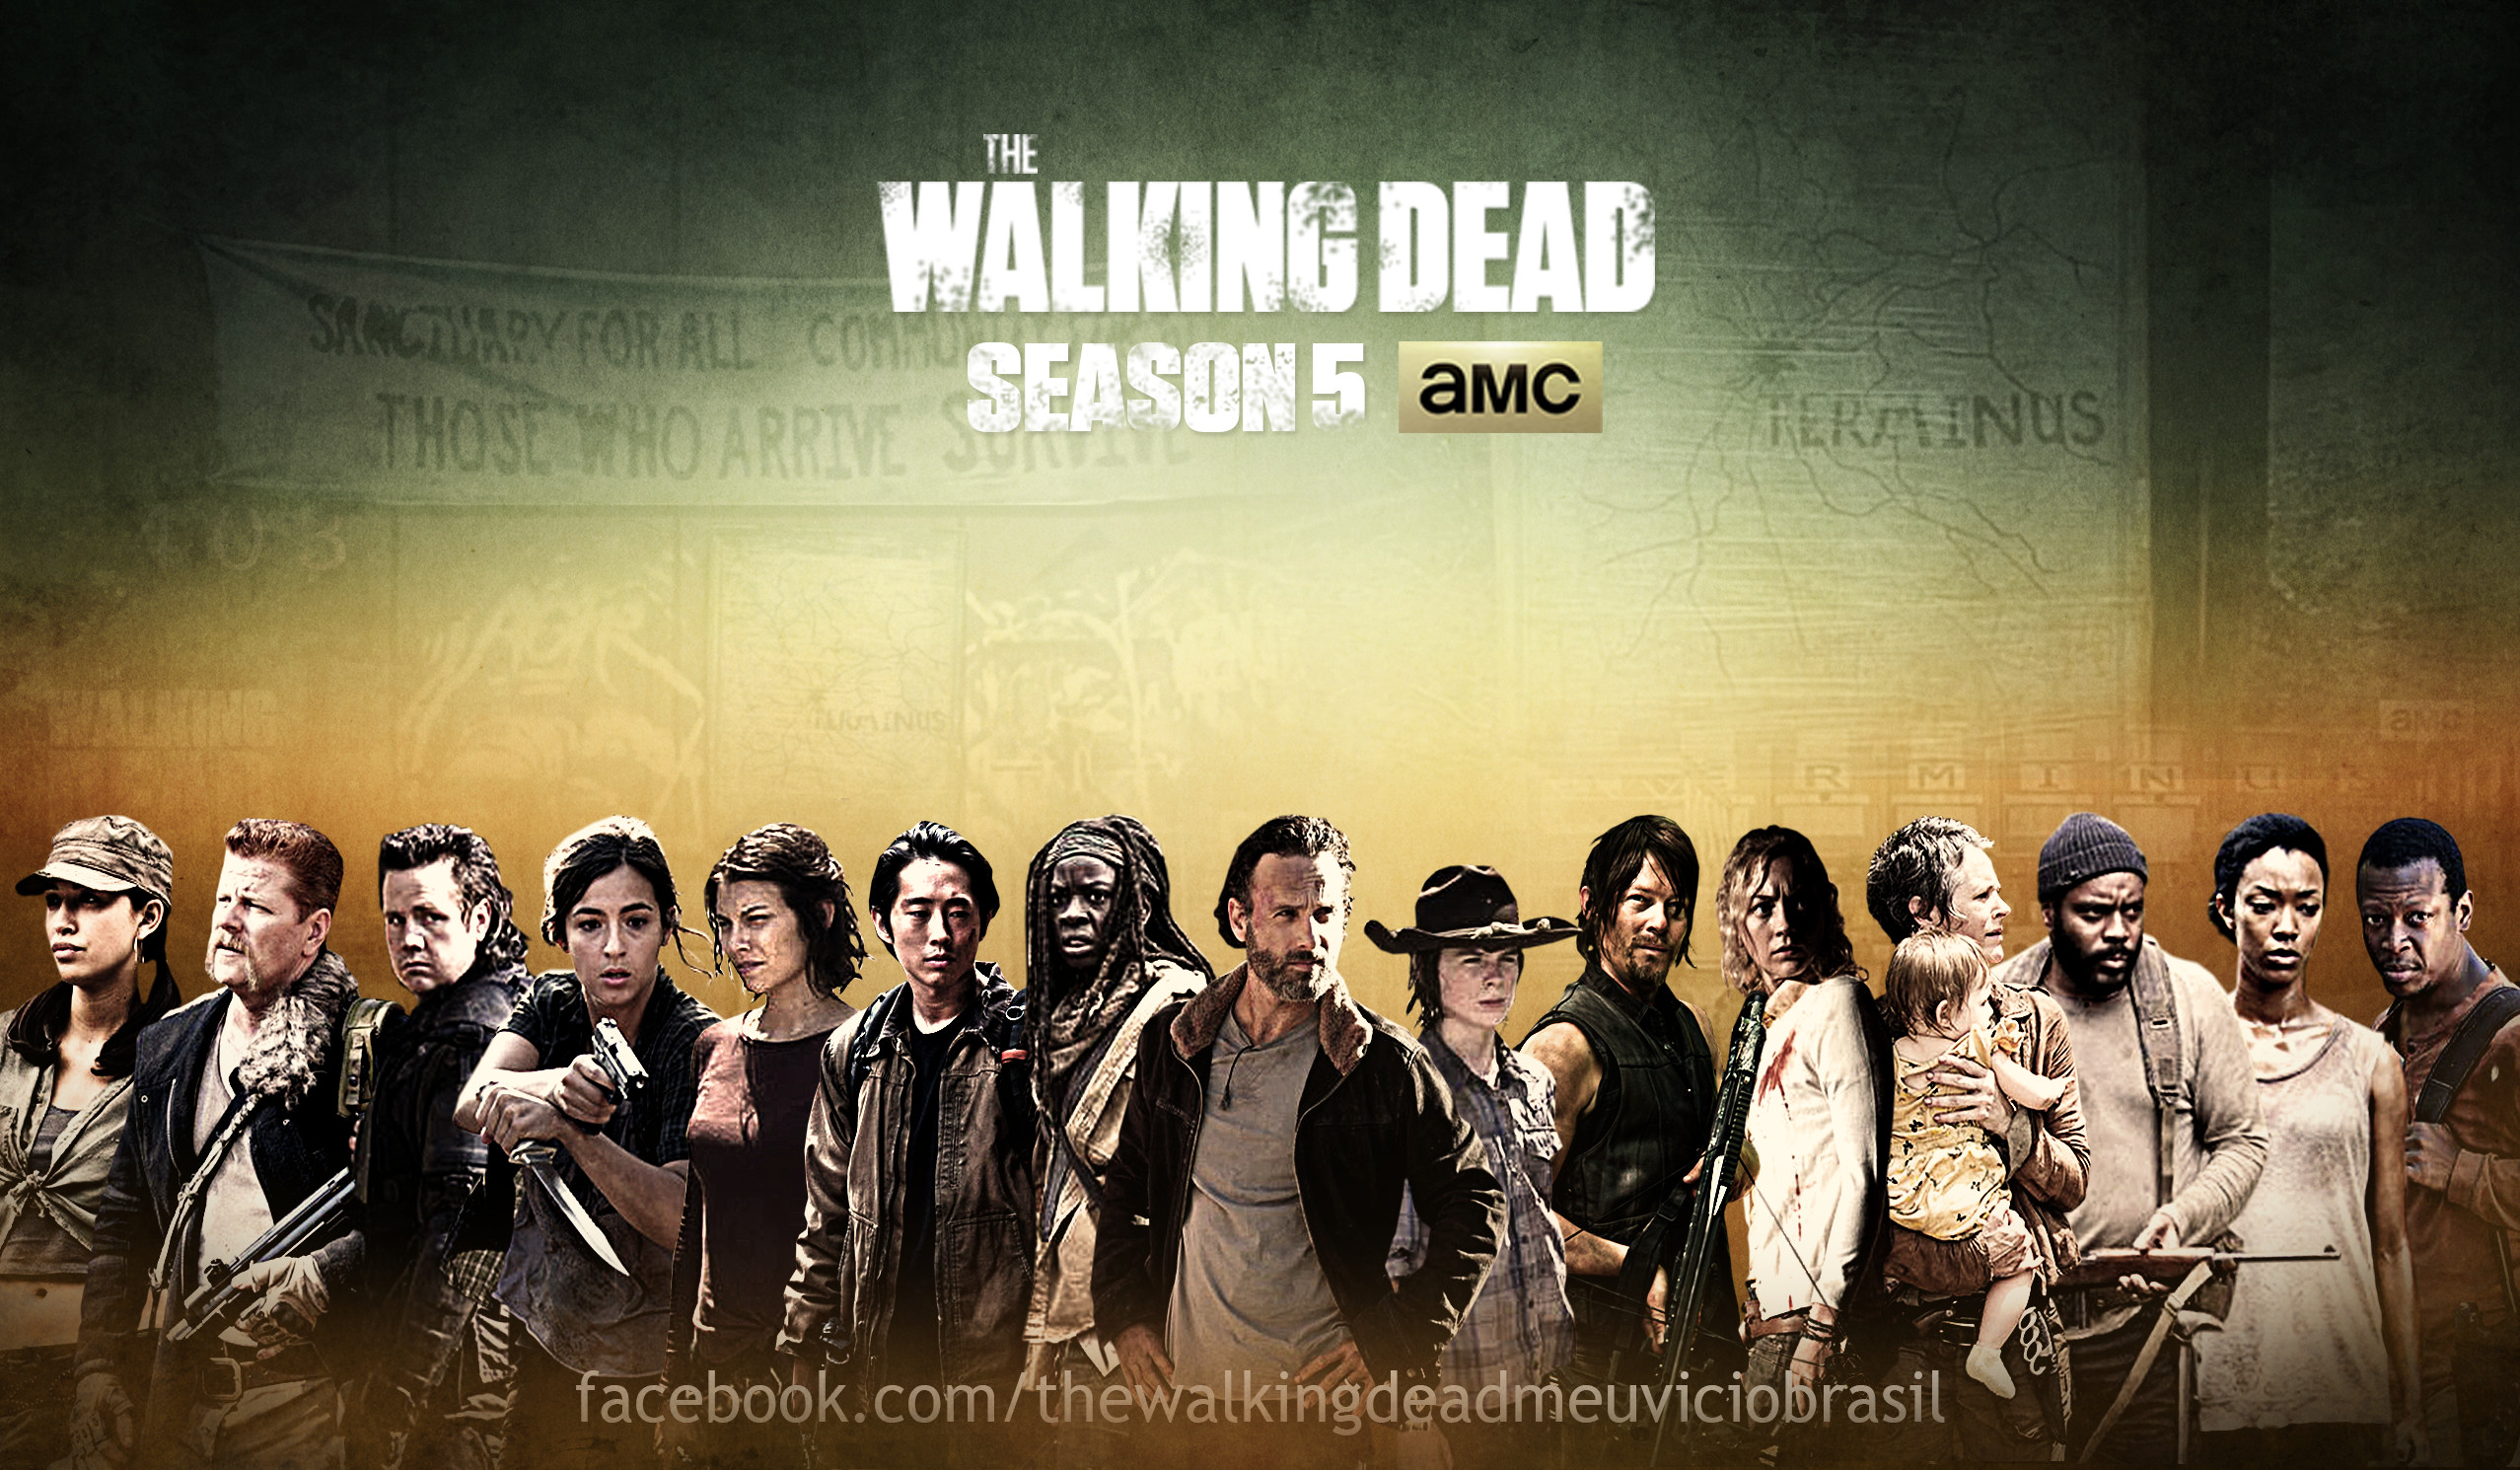 The Walking Dead Season 5 Wallpaper background picture